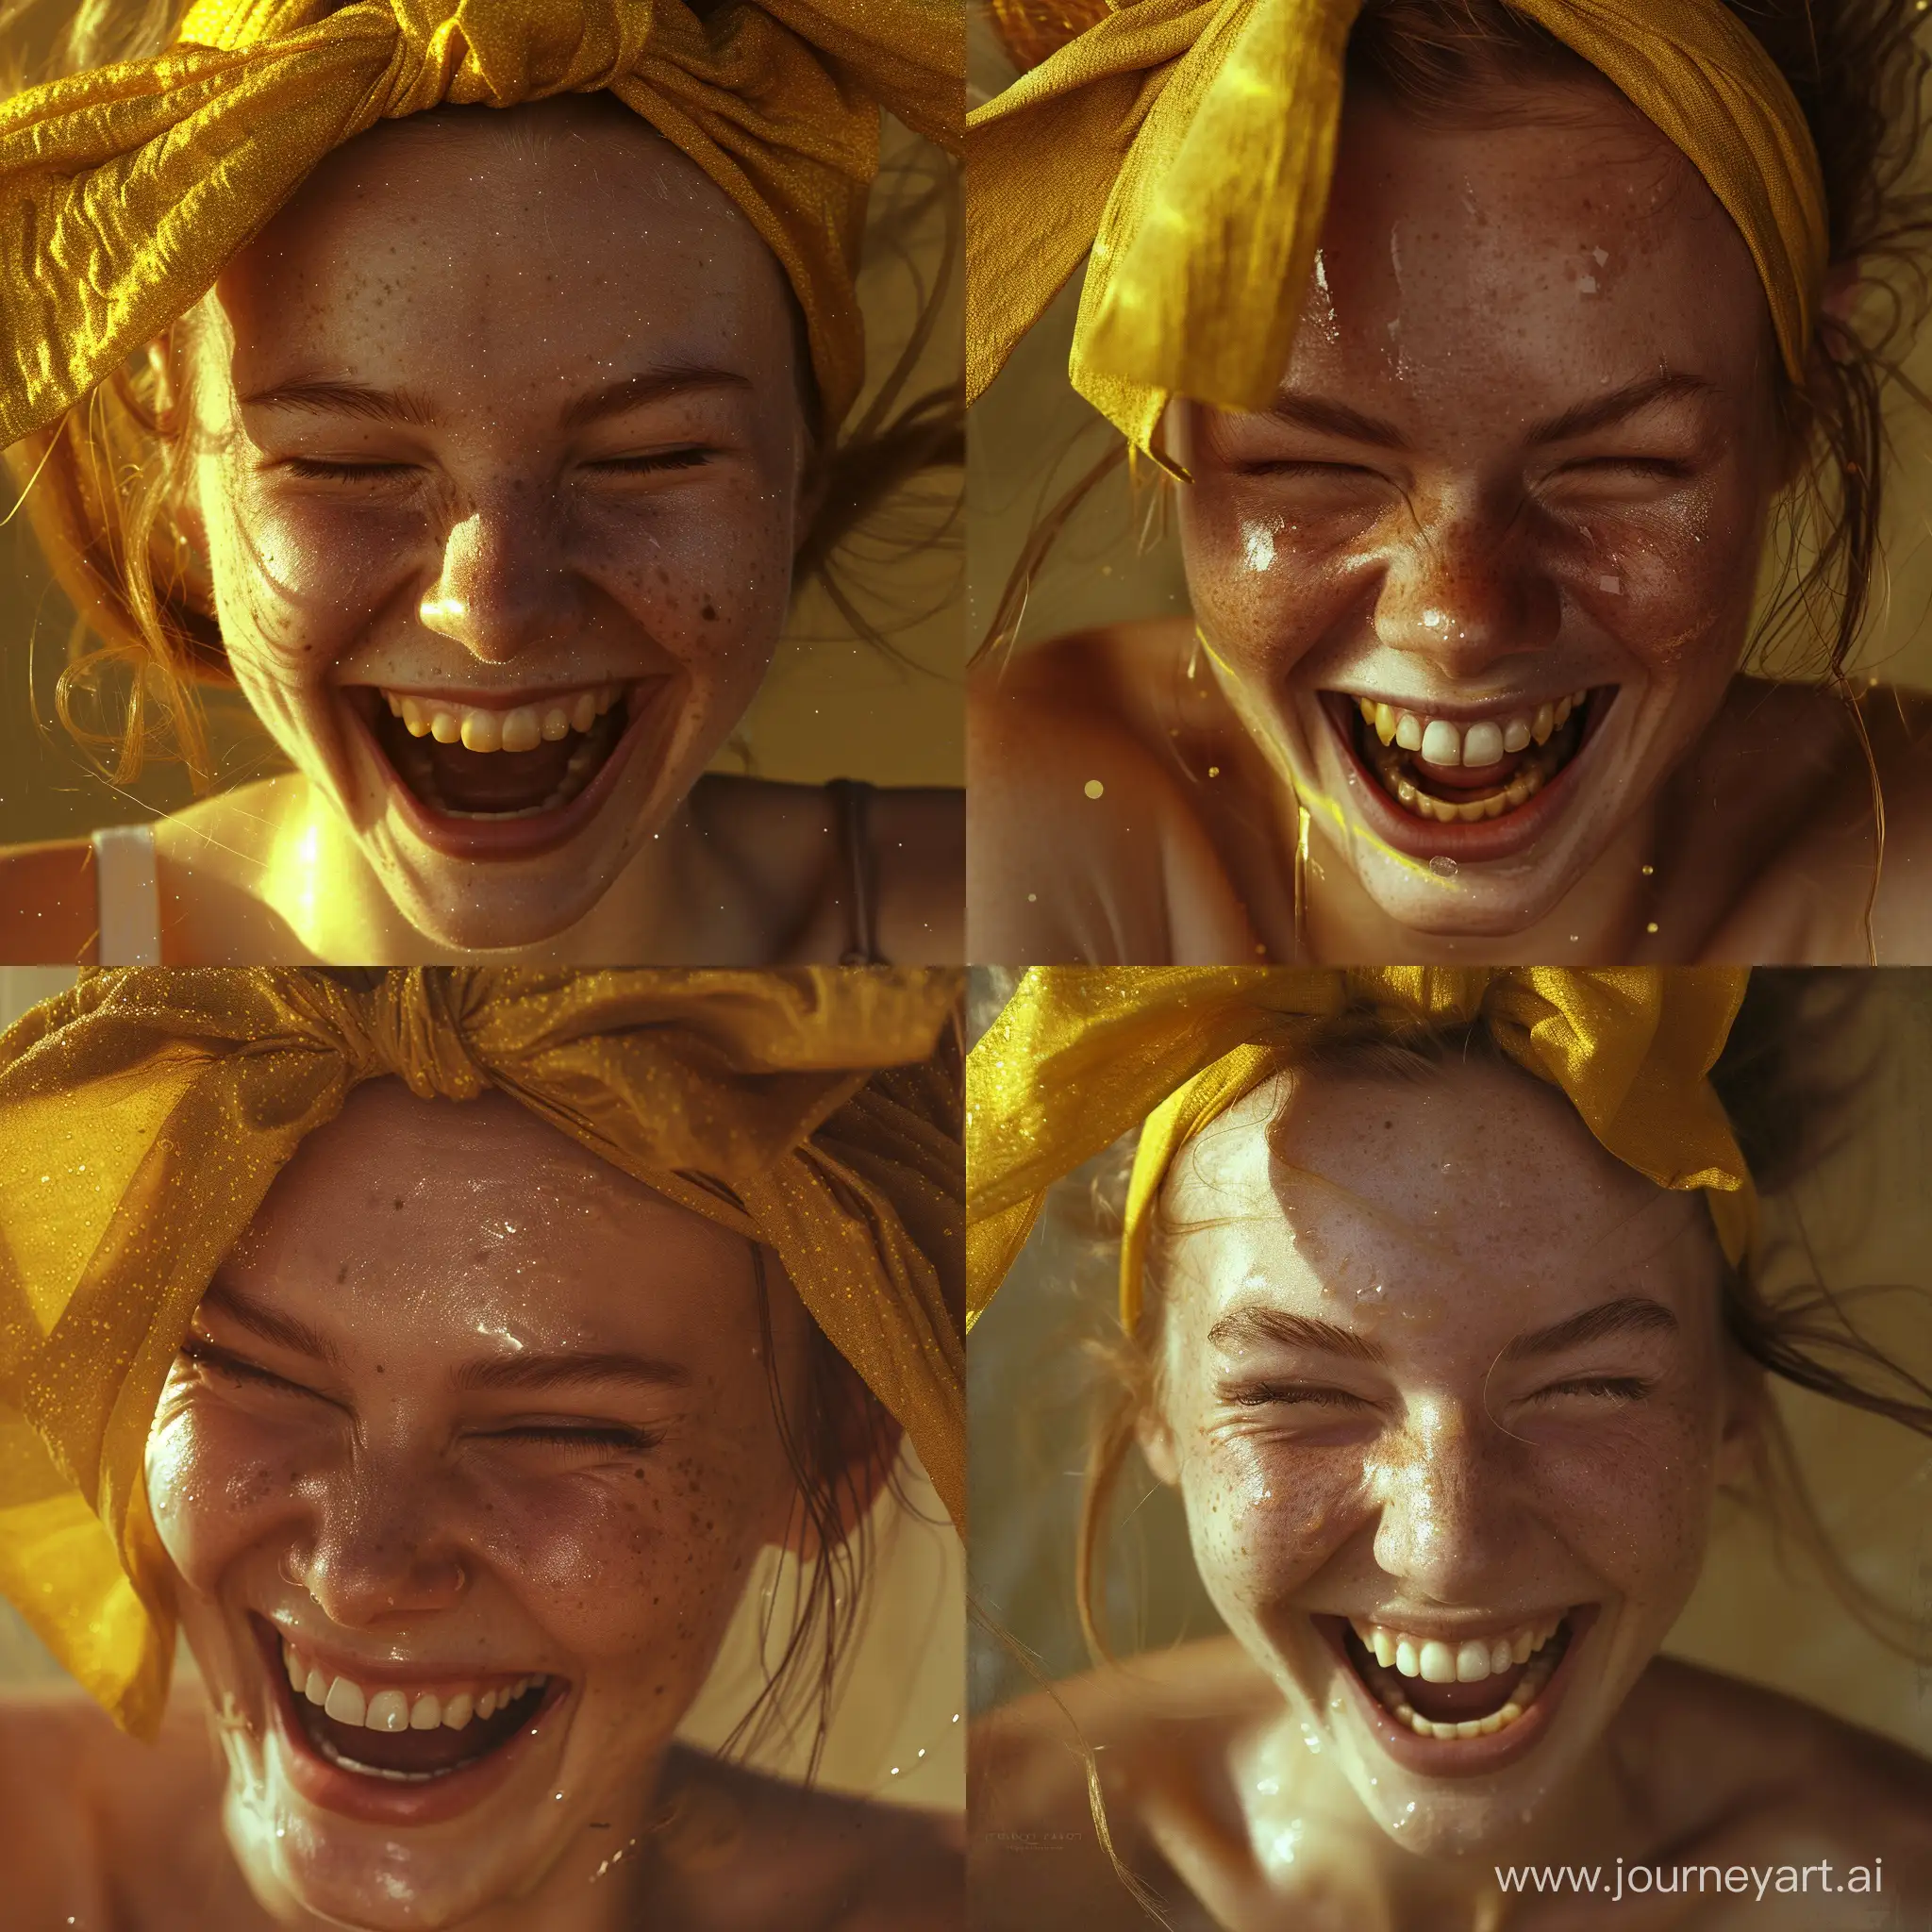 Joyful-Young-Woman-with-Yellow-Headband-Laughing-in-HighResolution-CloseUp